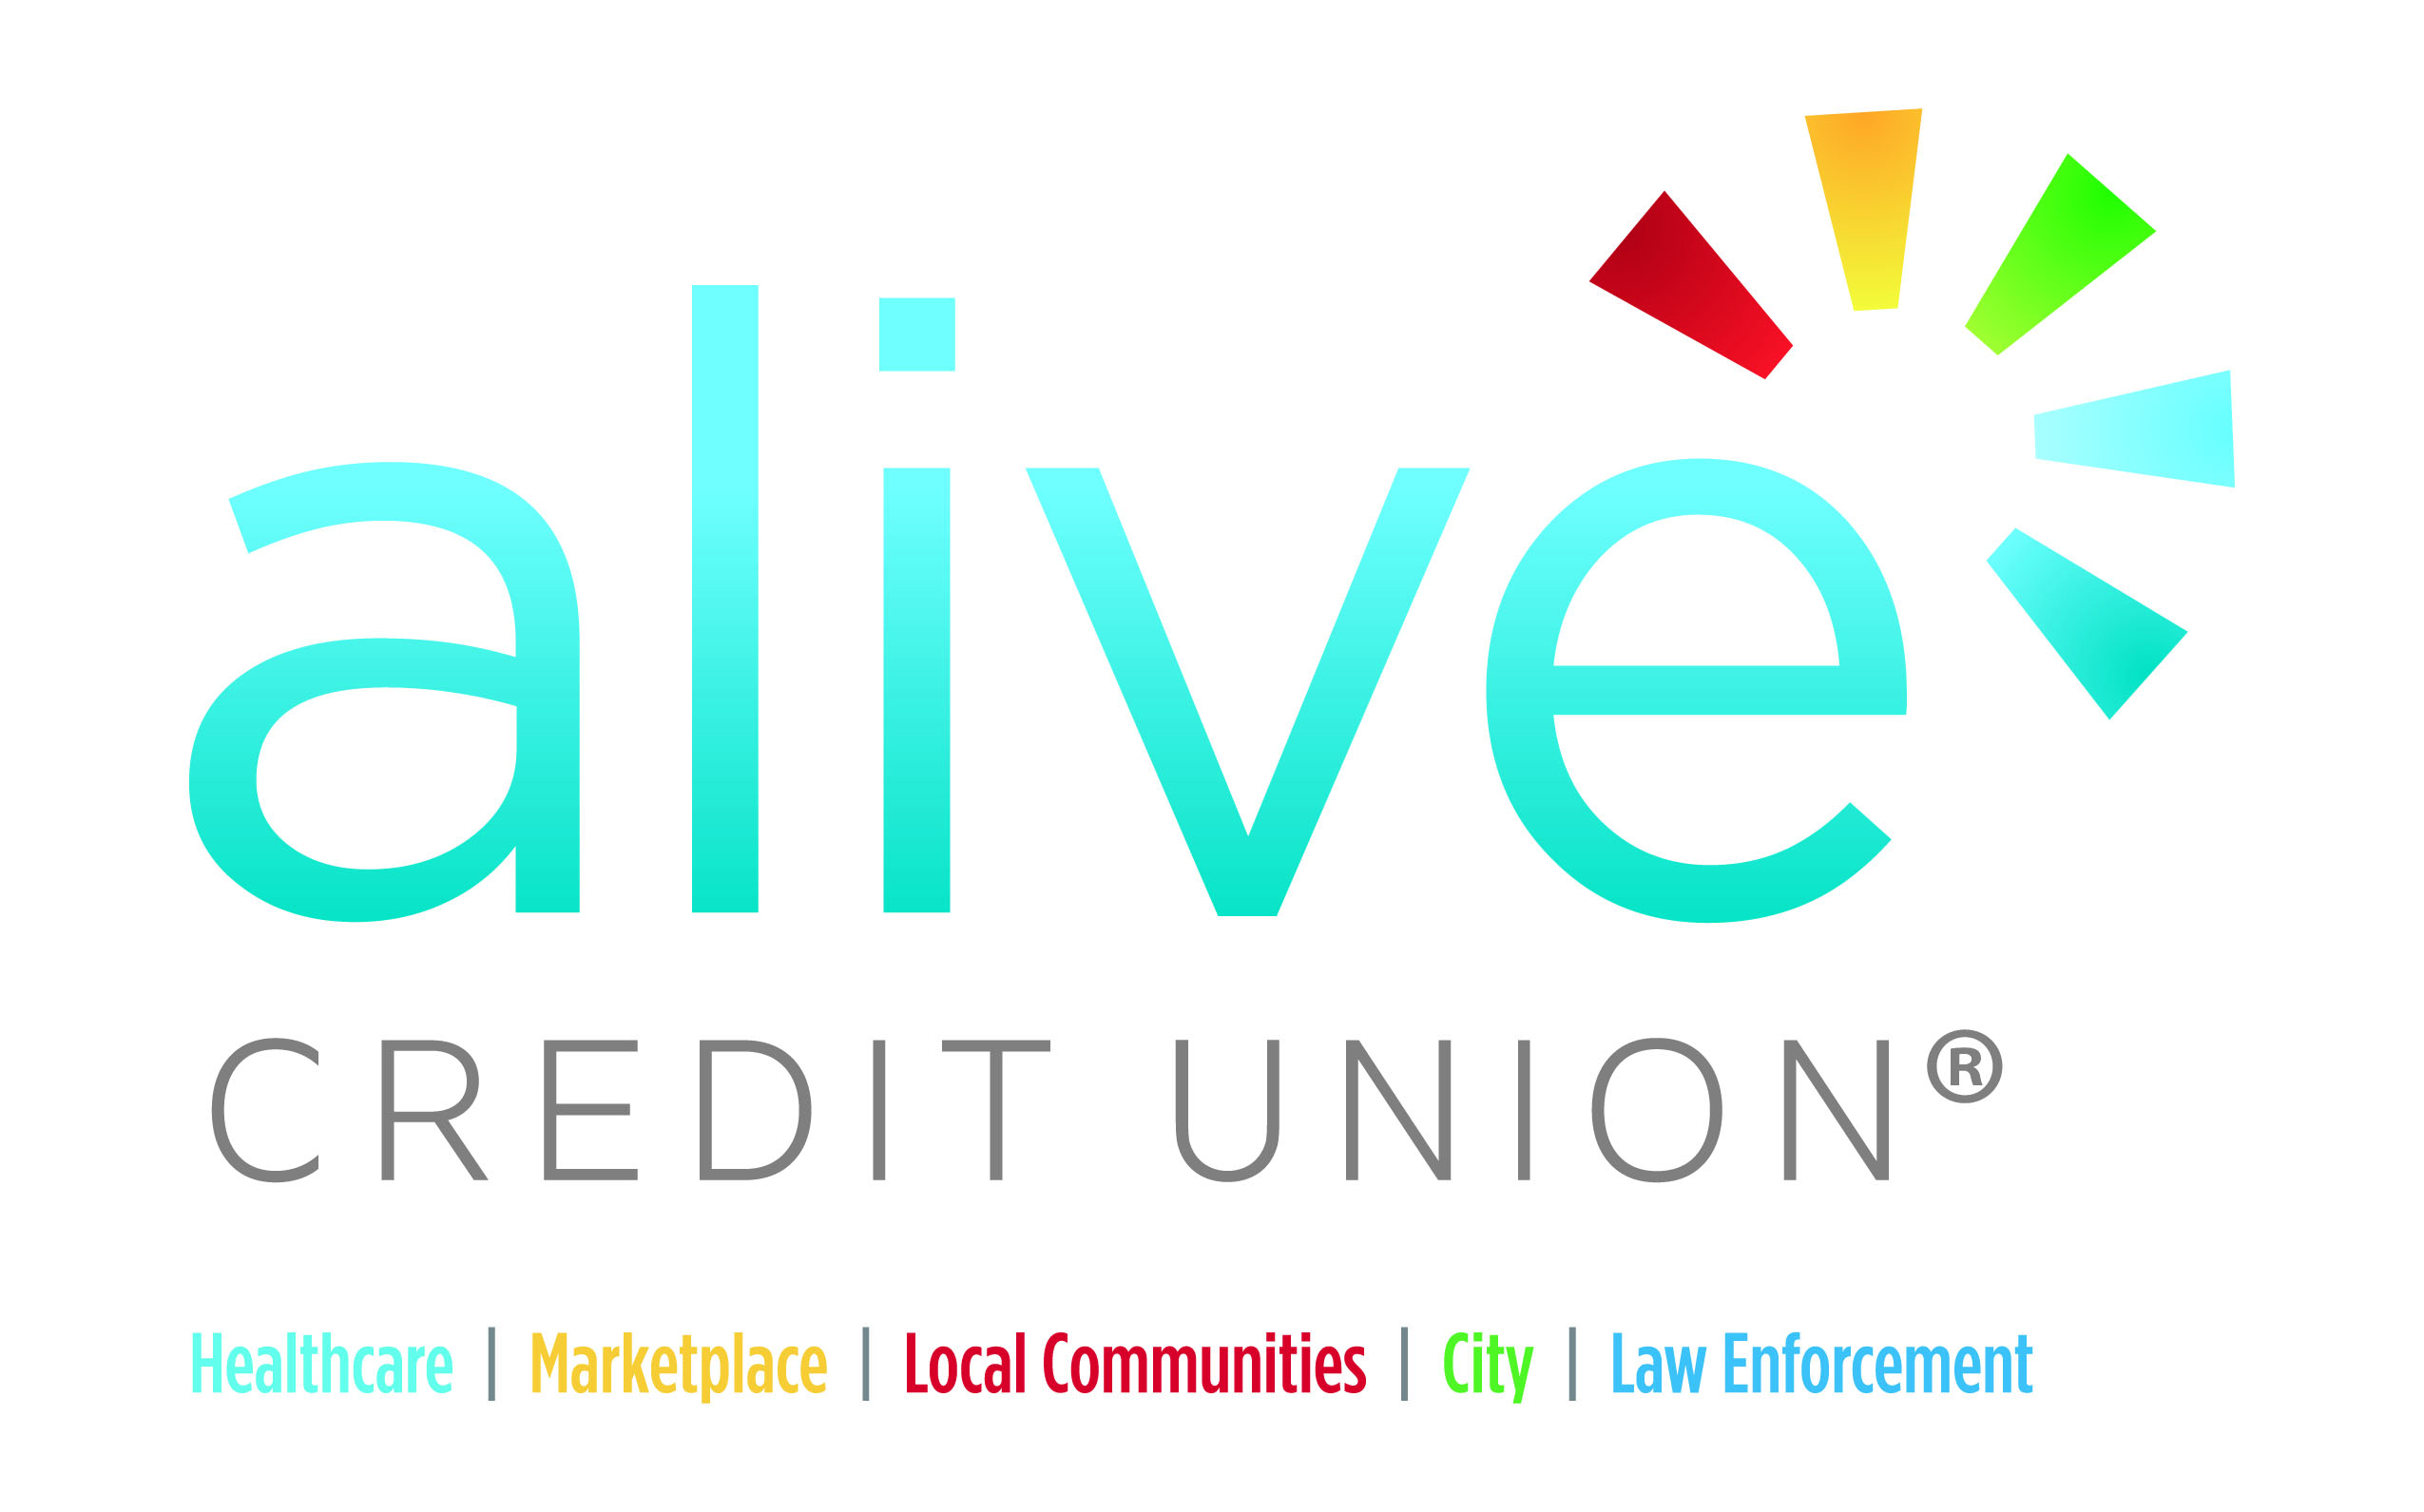 Alive Credit Union